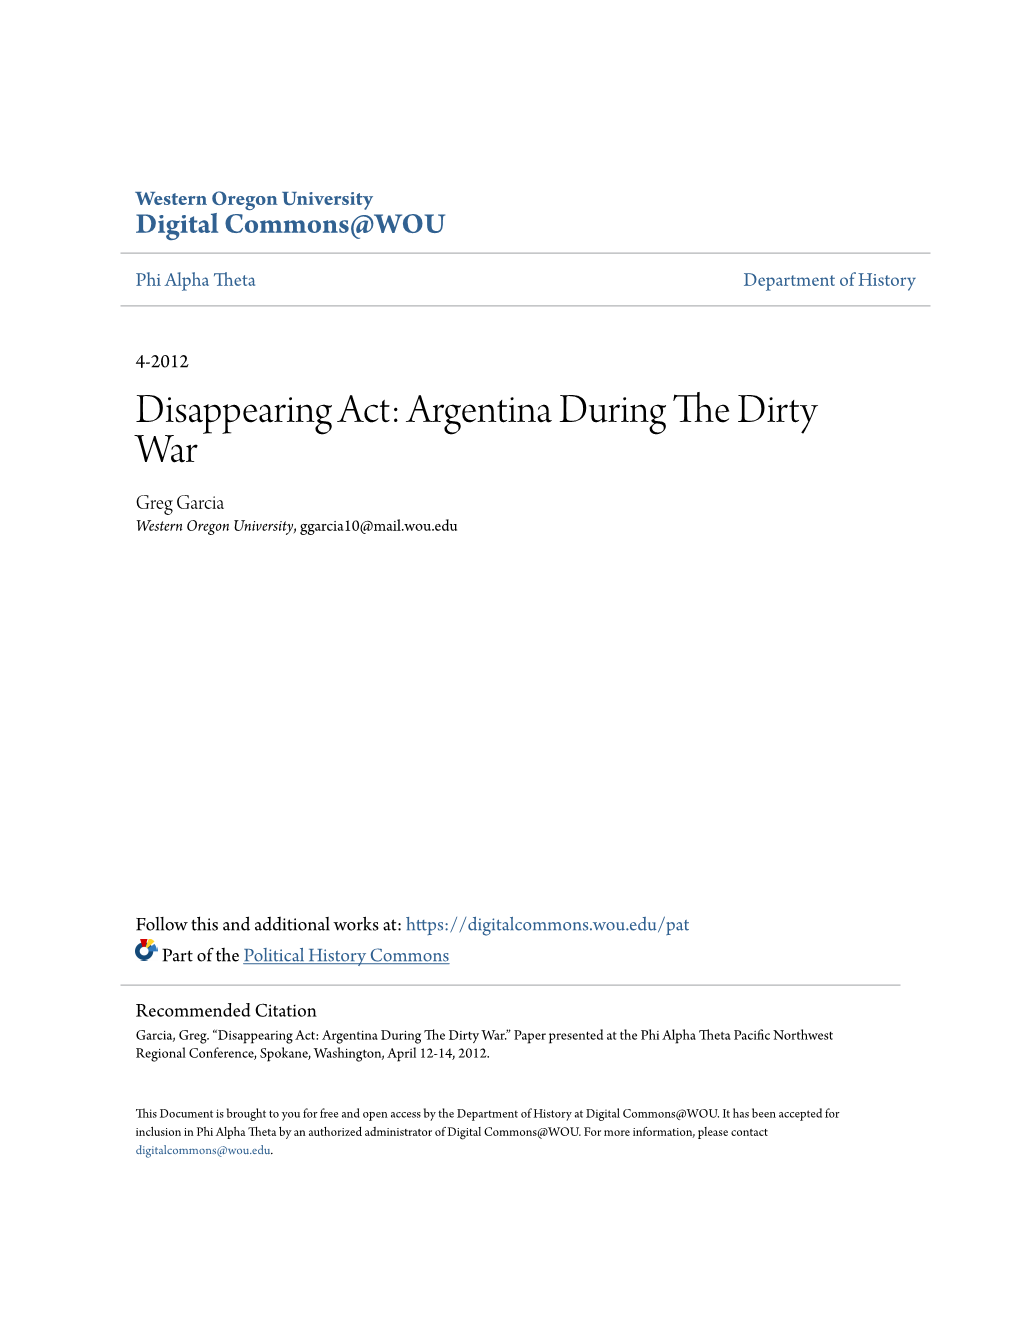 Argentina During the Dirty War Greg Garcia Western Oregon University, Ggarcia10@Mail.Wou.Edu